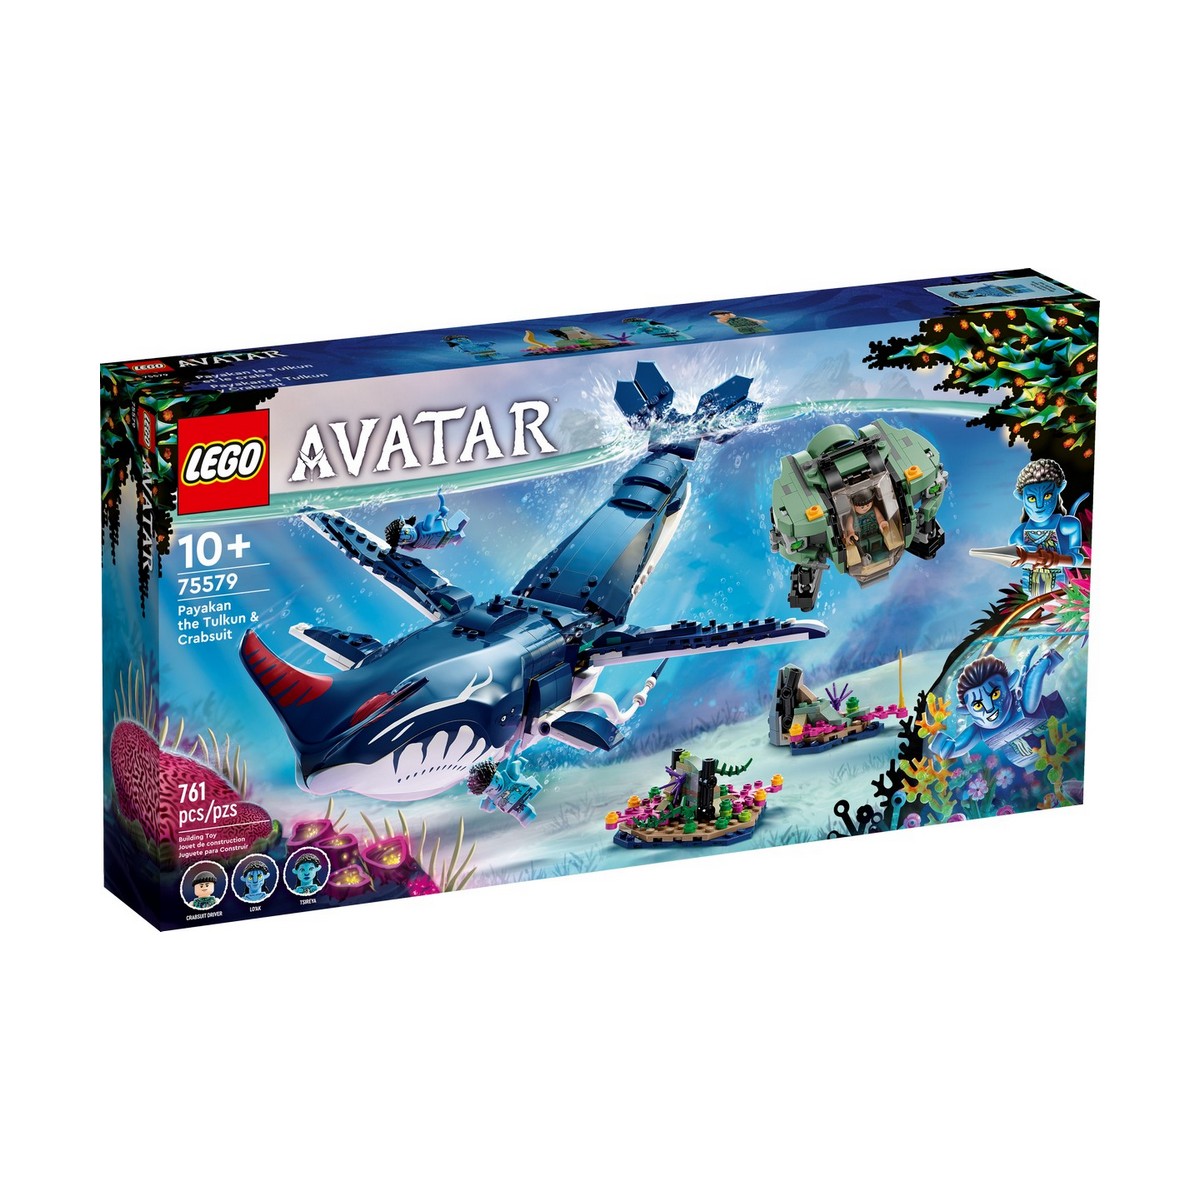 LEGO AVATAR TULKUN PAYAKAN A KRABI OBLEK /75579/ posledný kus